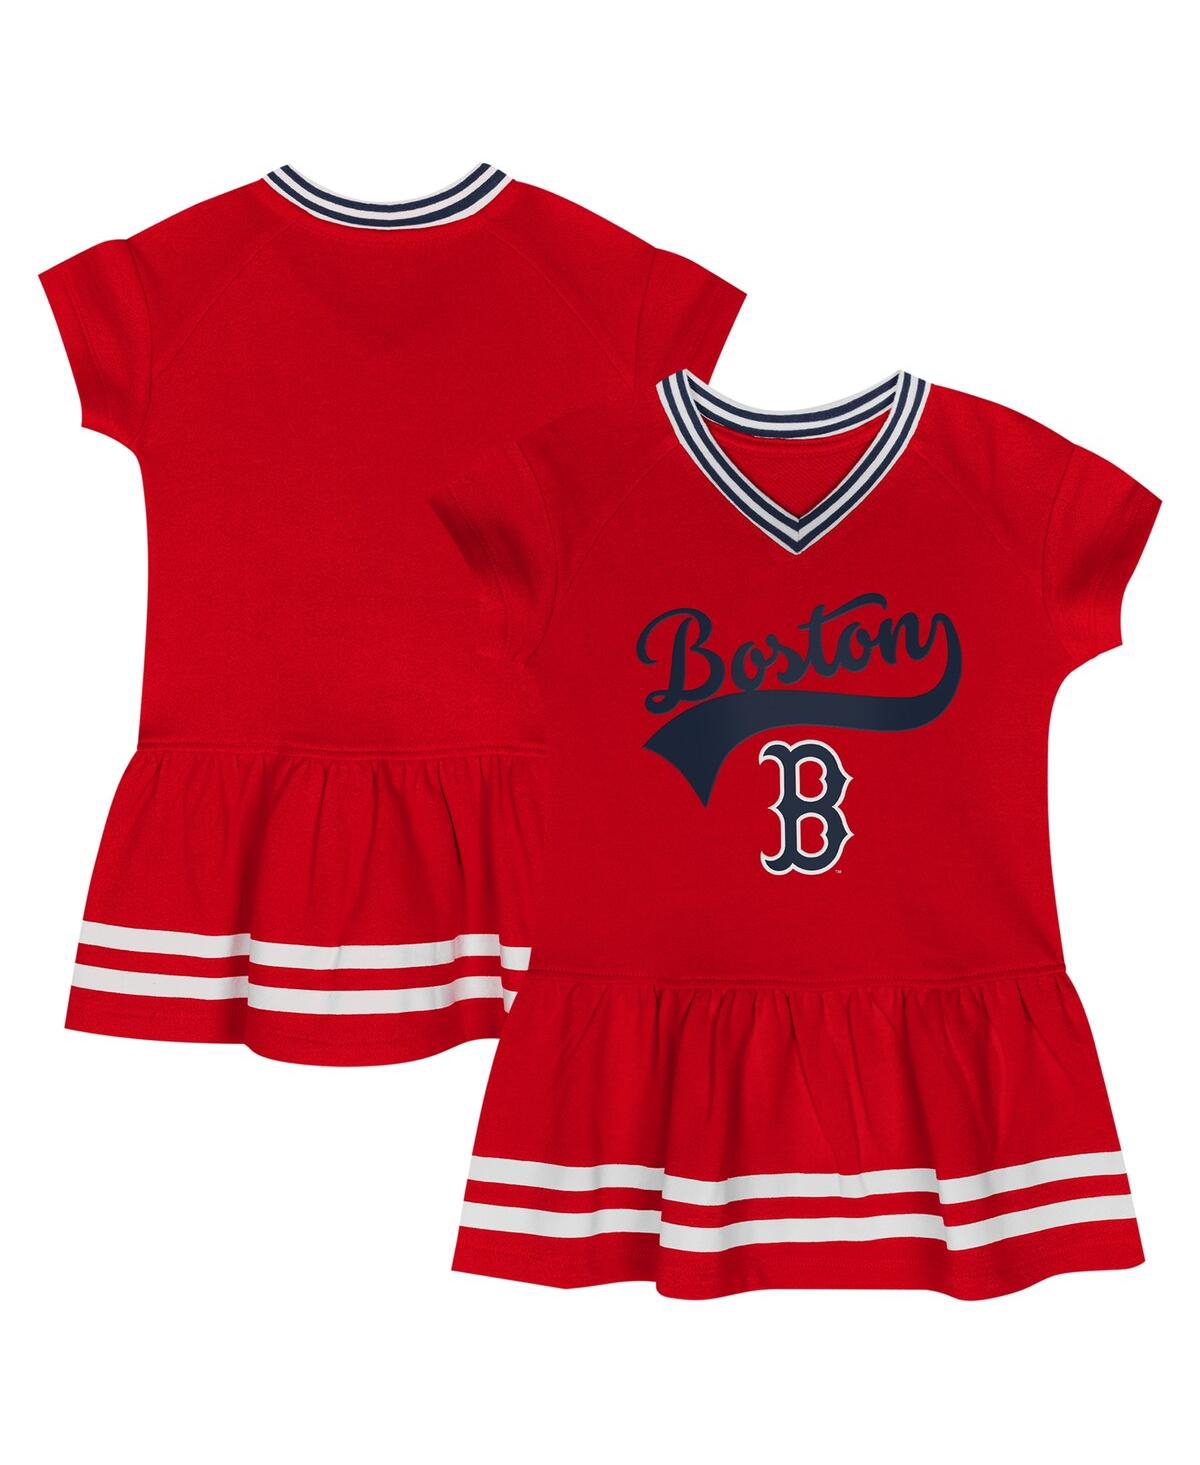 Outerstuff Babies' Girls Toddler Fanatics Red Boston Red Sox Sweet Catcher V-neck Dress